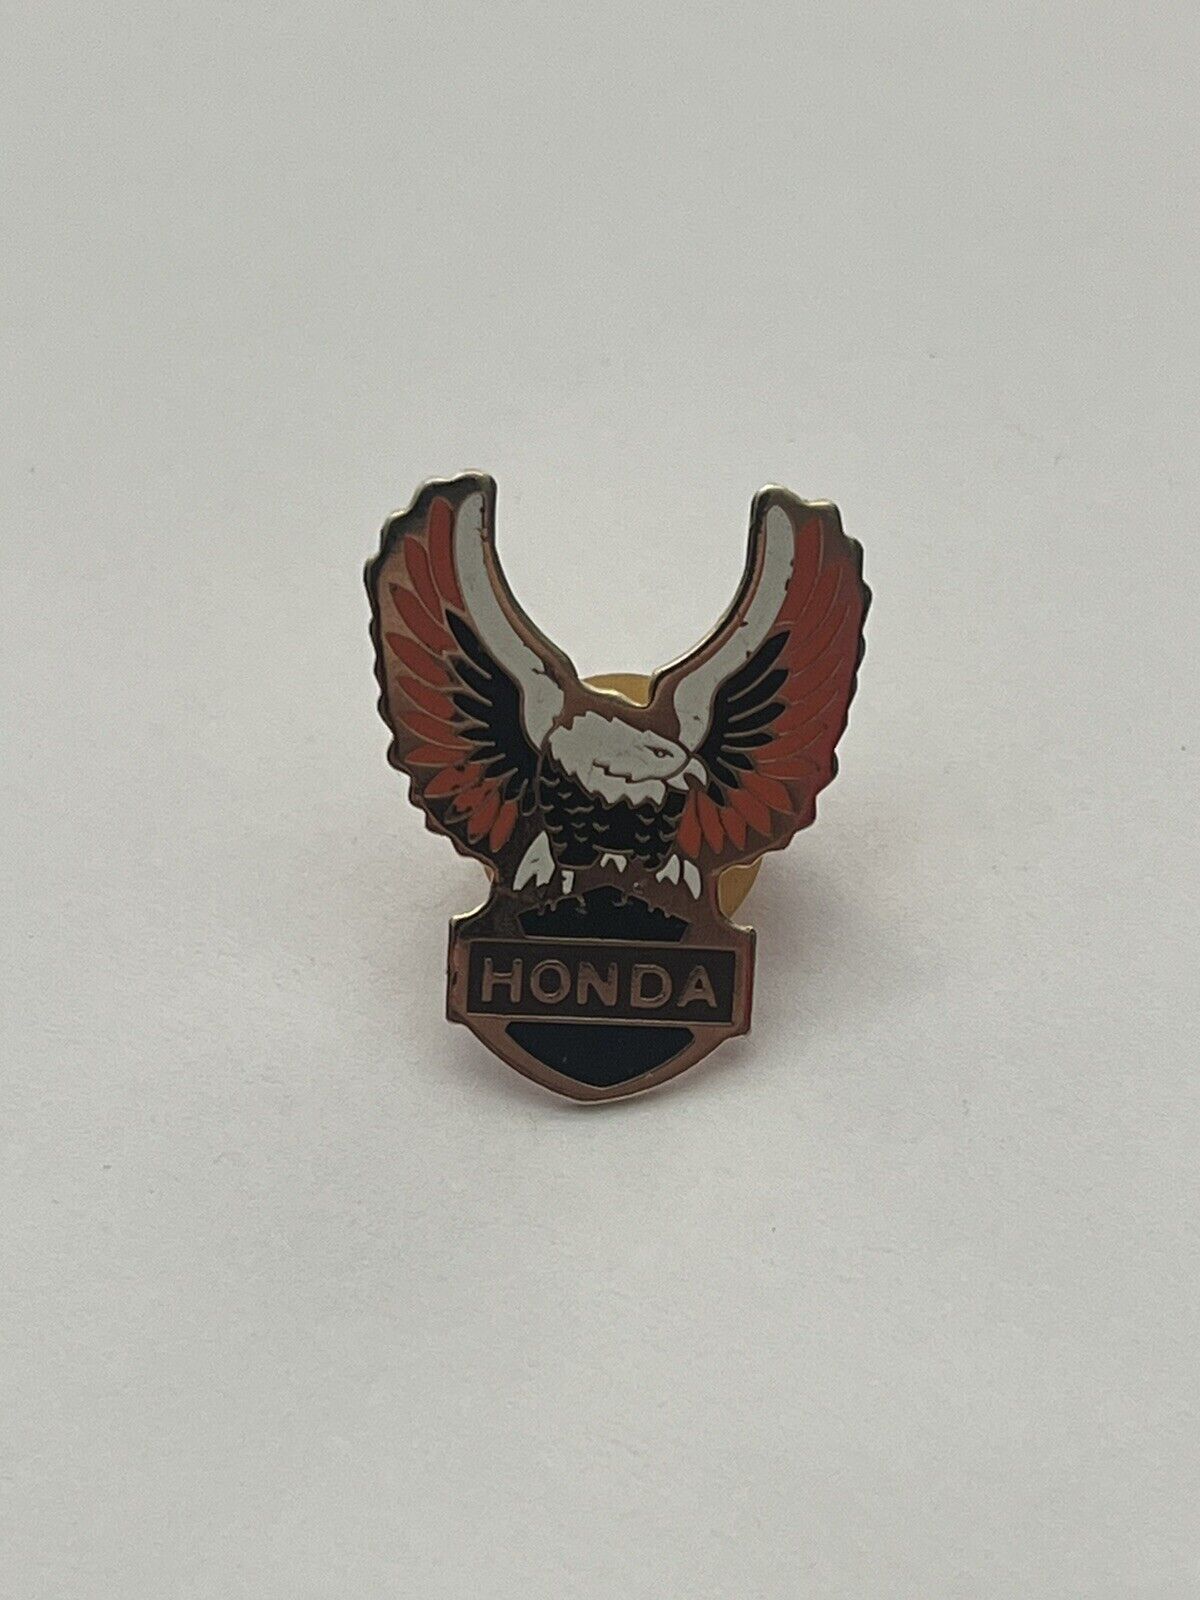 Honda Motorcycle Eagle Pin Biker Pinback Vest Lapel Hat Pin Jacket